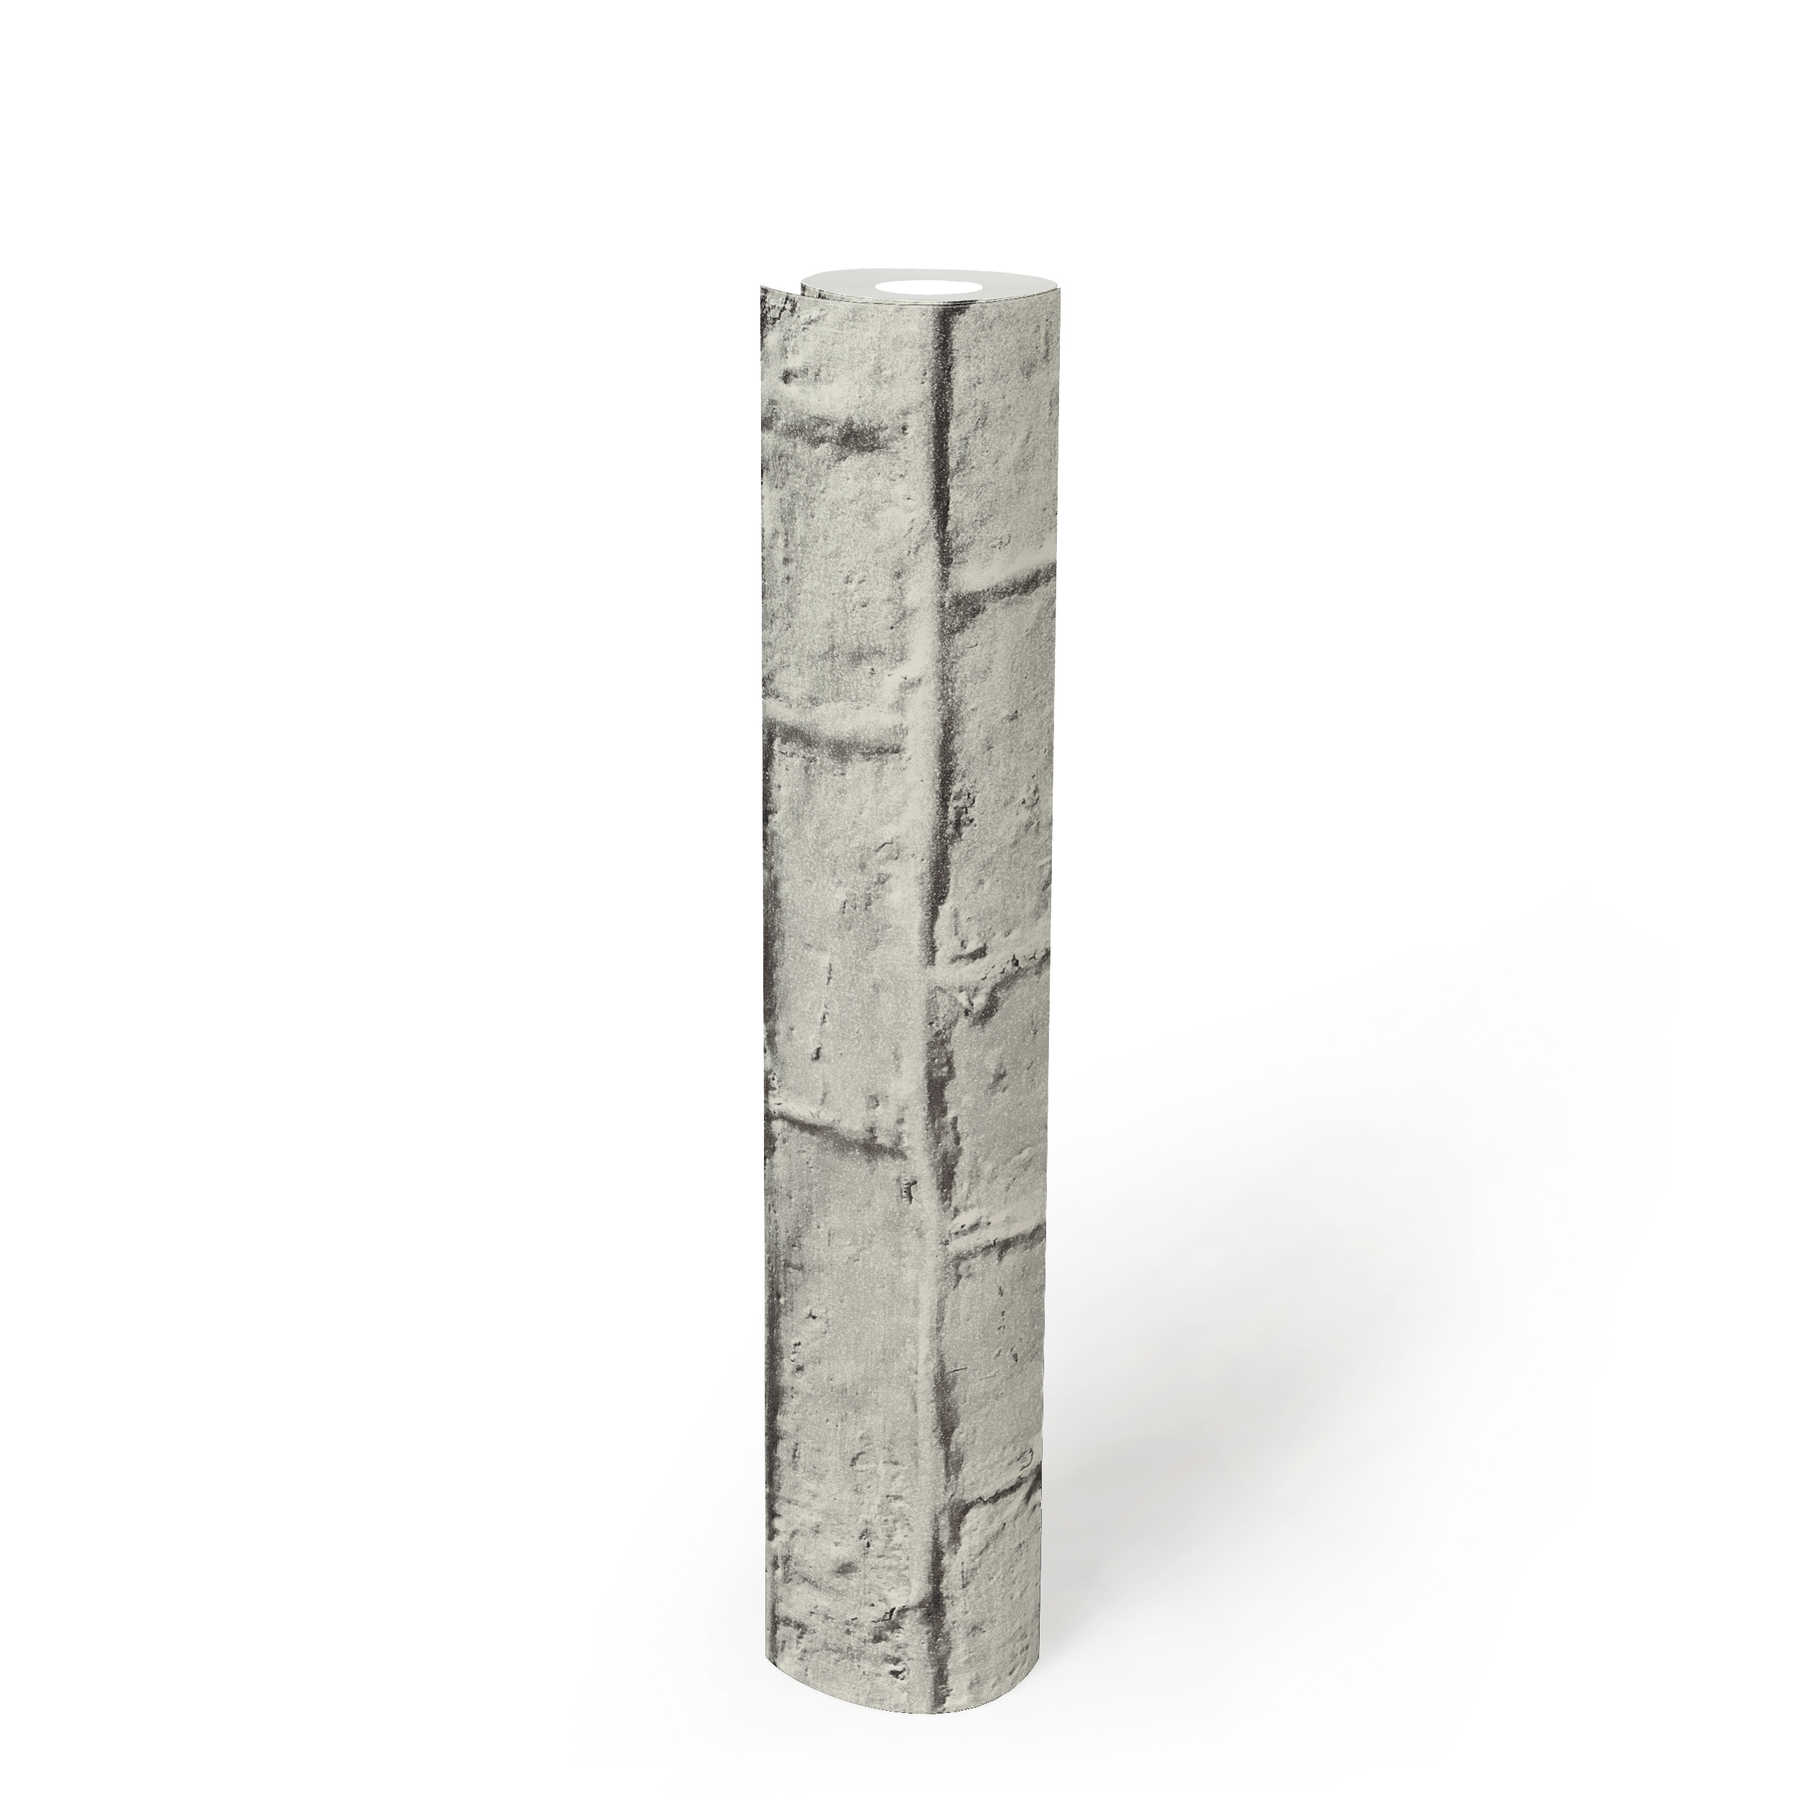             Stone wallpaper smooth brick look - grey, white
        